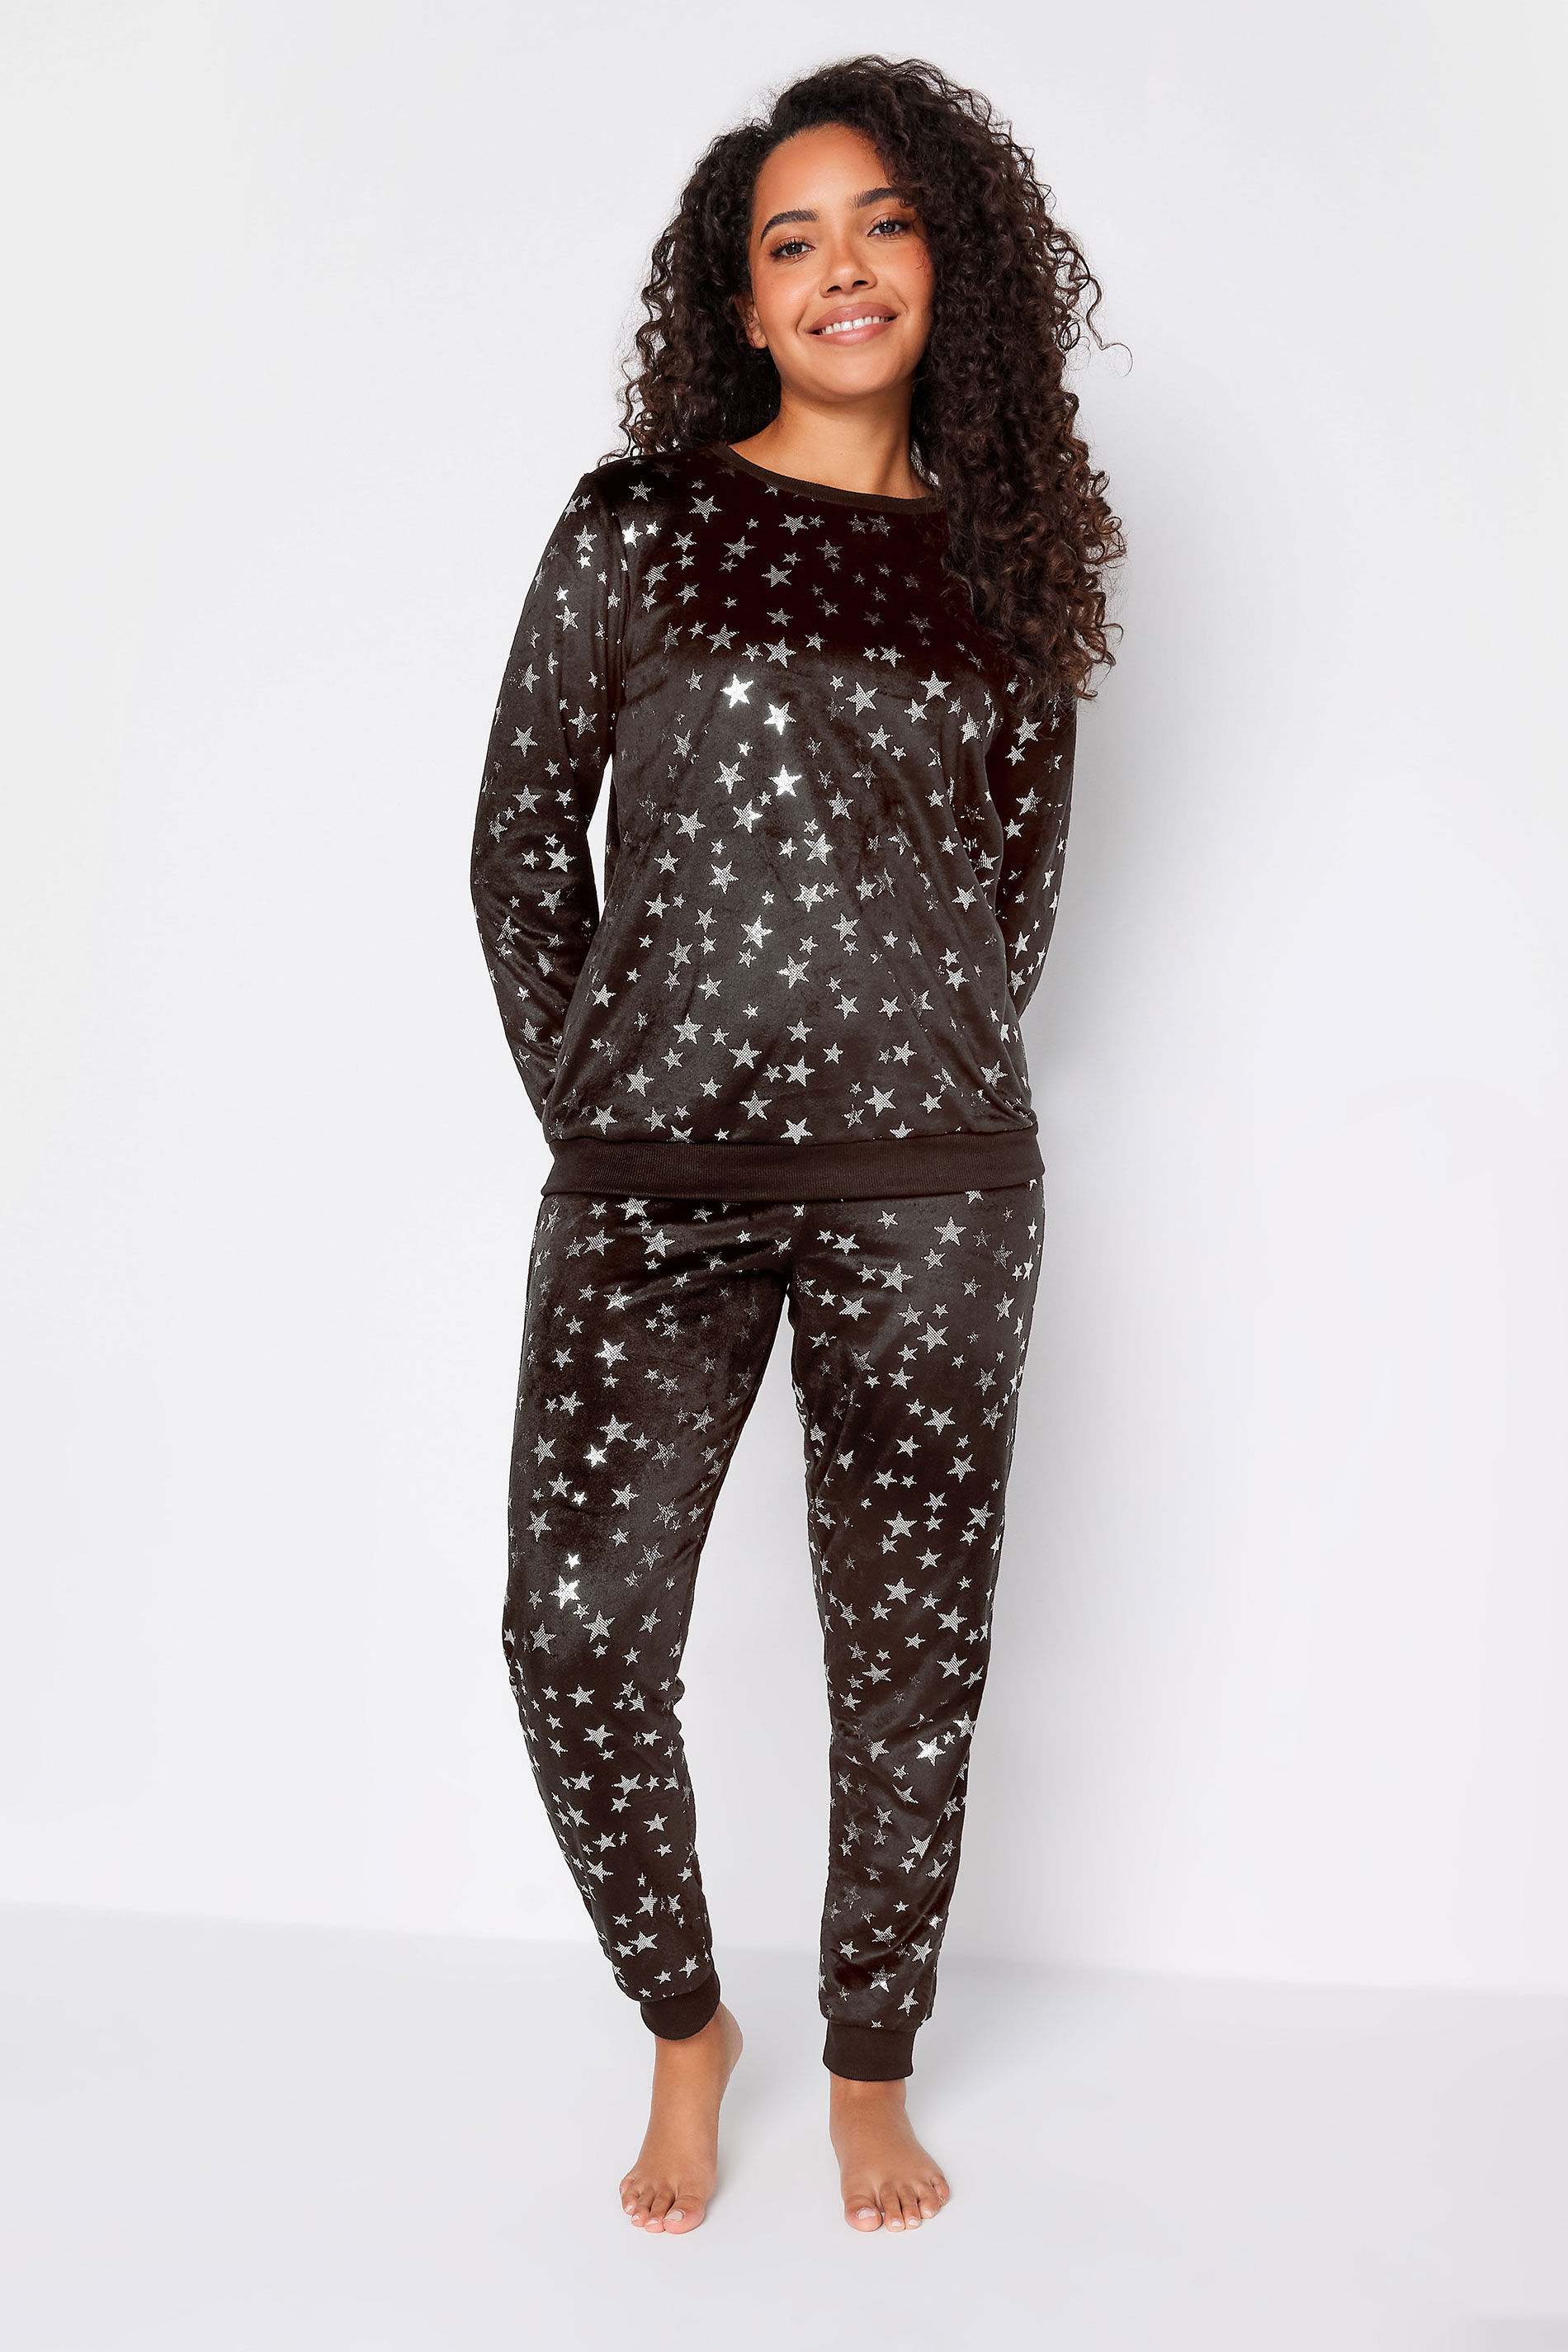 M&Co Black Foil Star Print Fleece Pyjama Lounge Set | M&Co 2